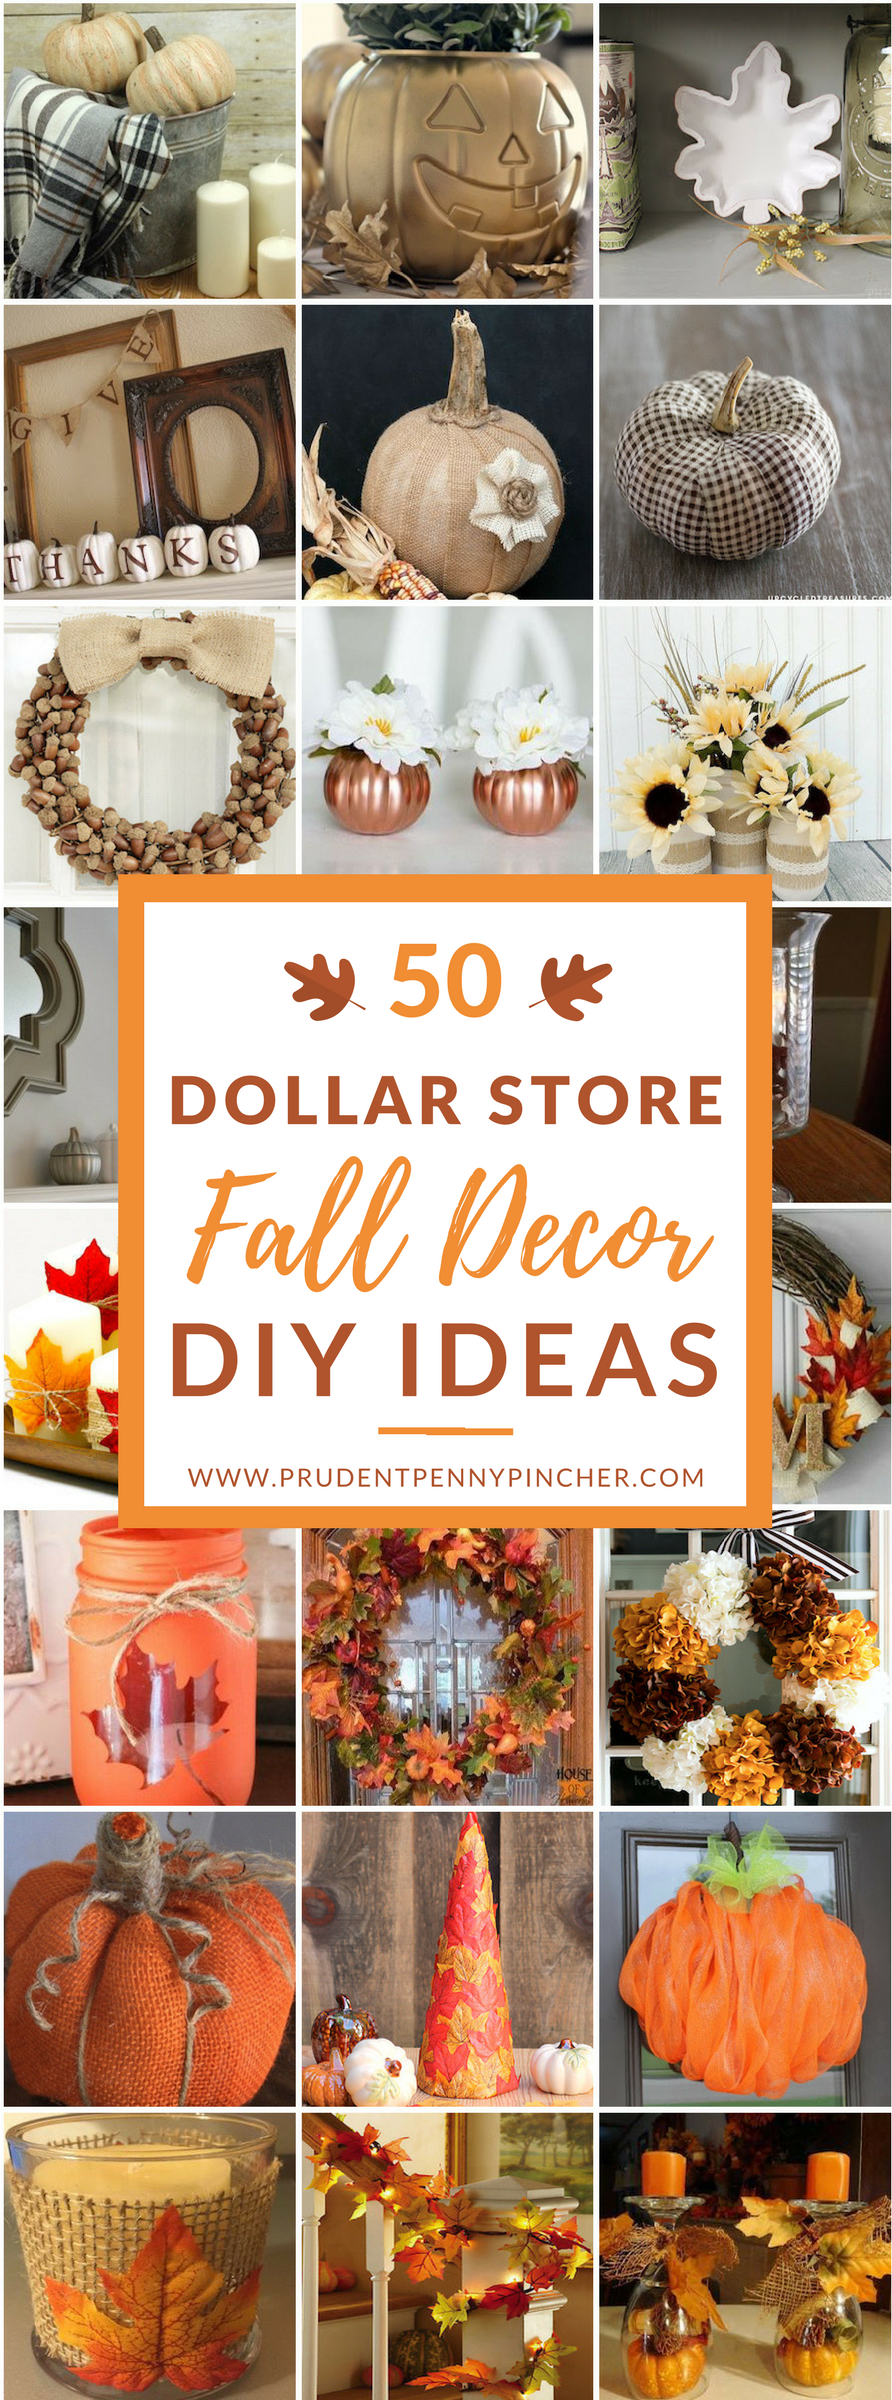 50 Dollar Store Fall Decor DIY Ideas